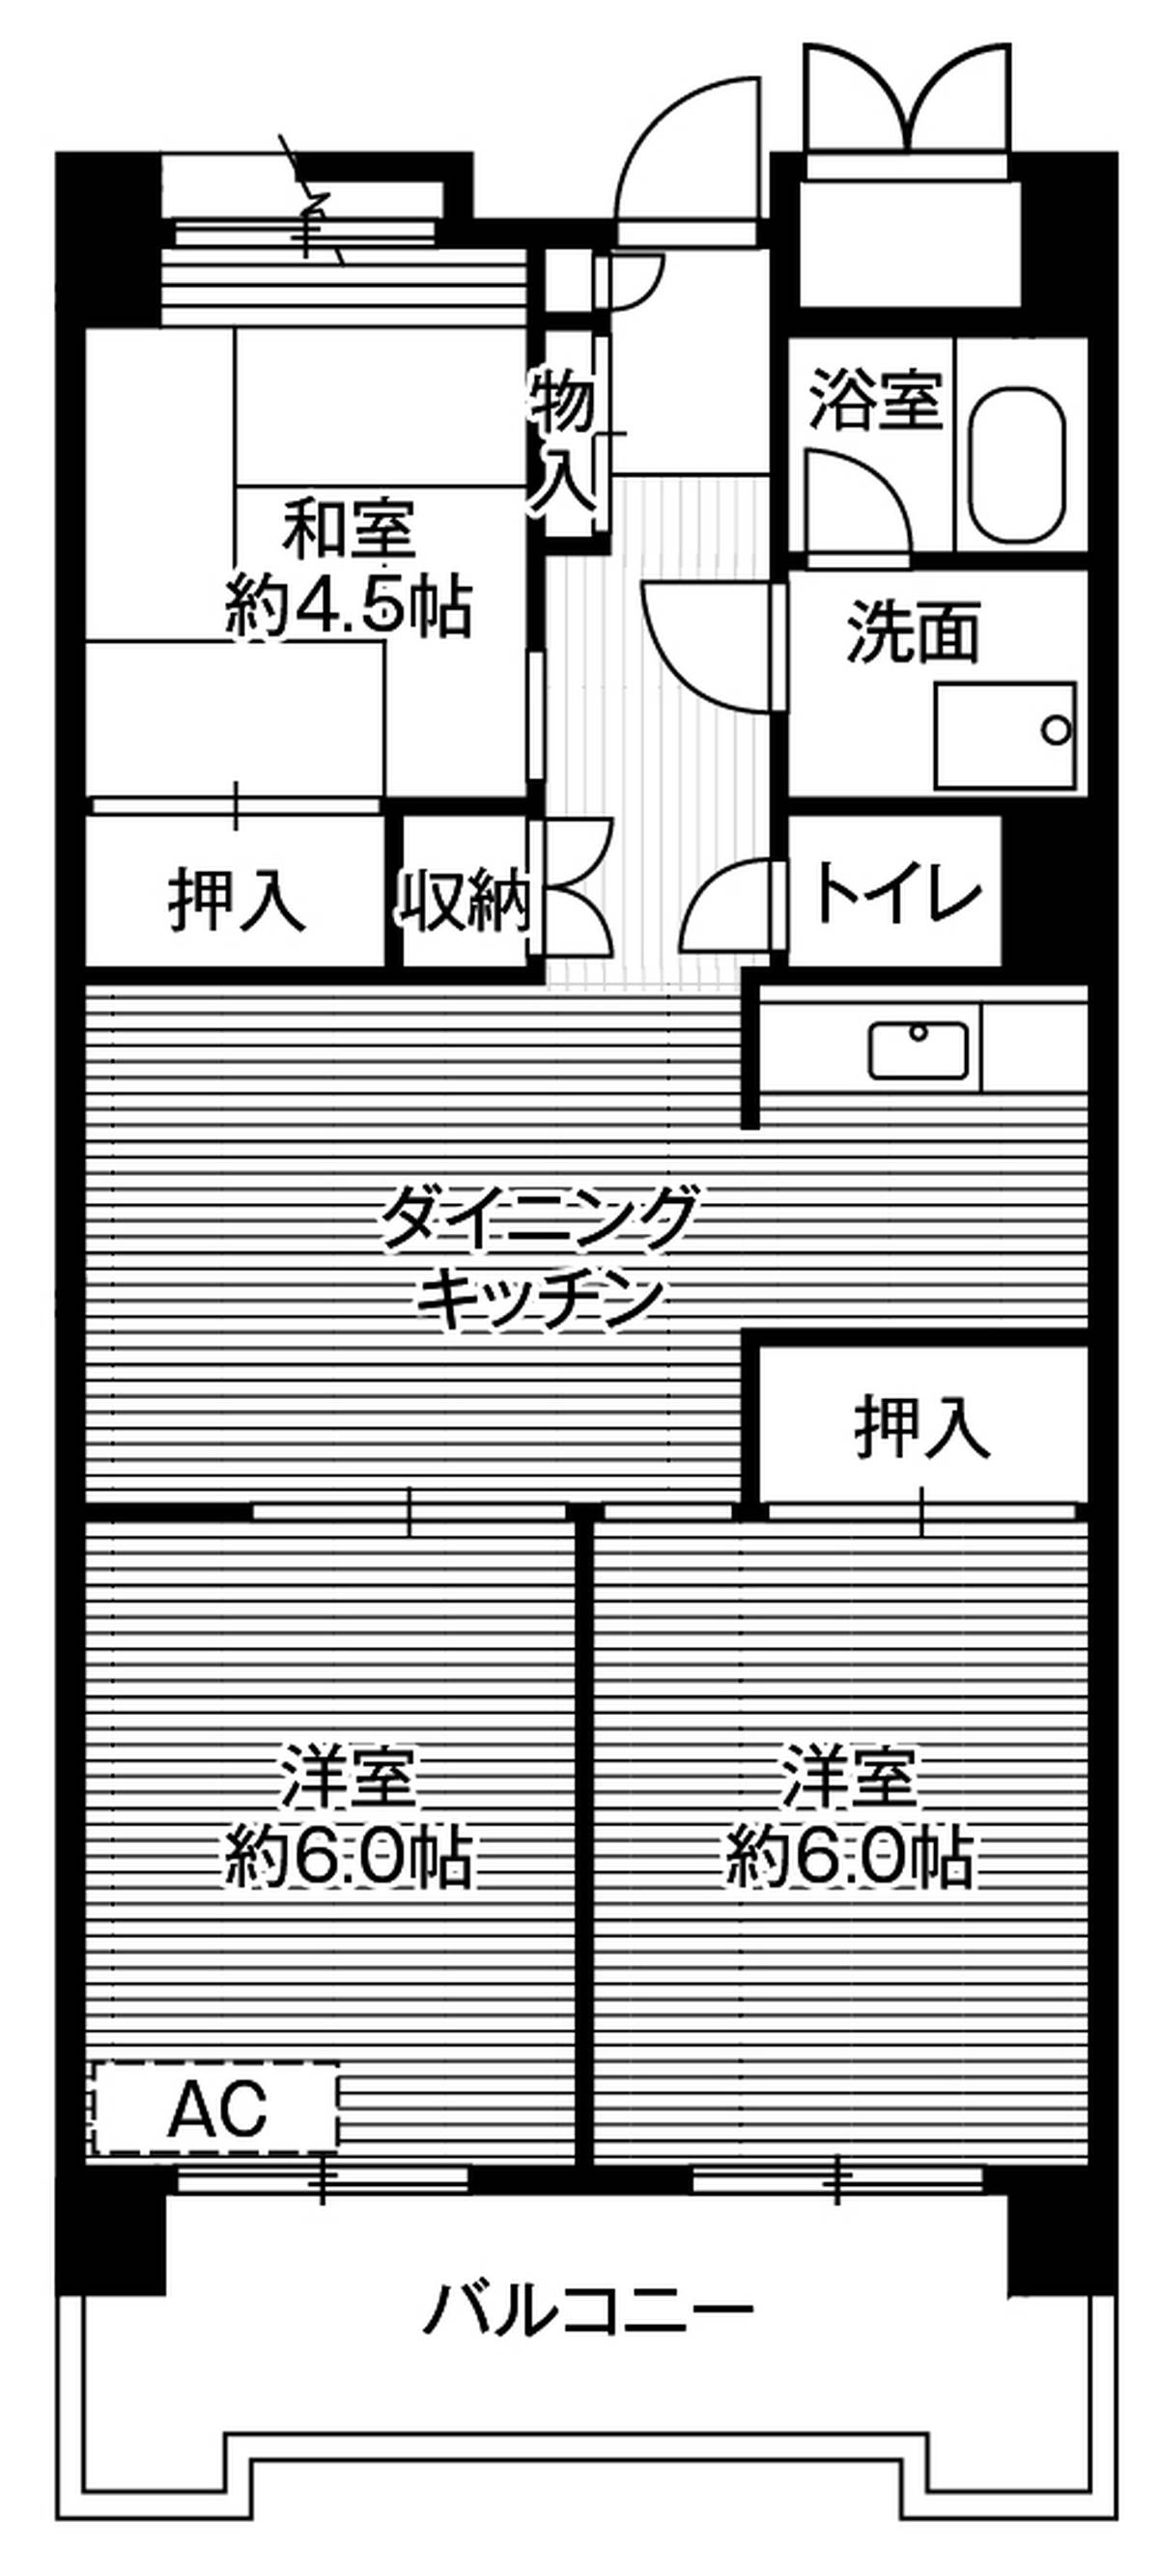 Sơ đồ phòng 3DK của Village House Shinagawa Yashio Tower ở Shinagawa-ku